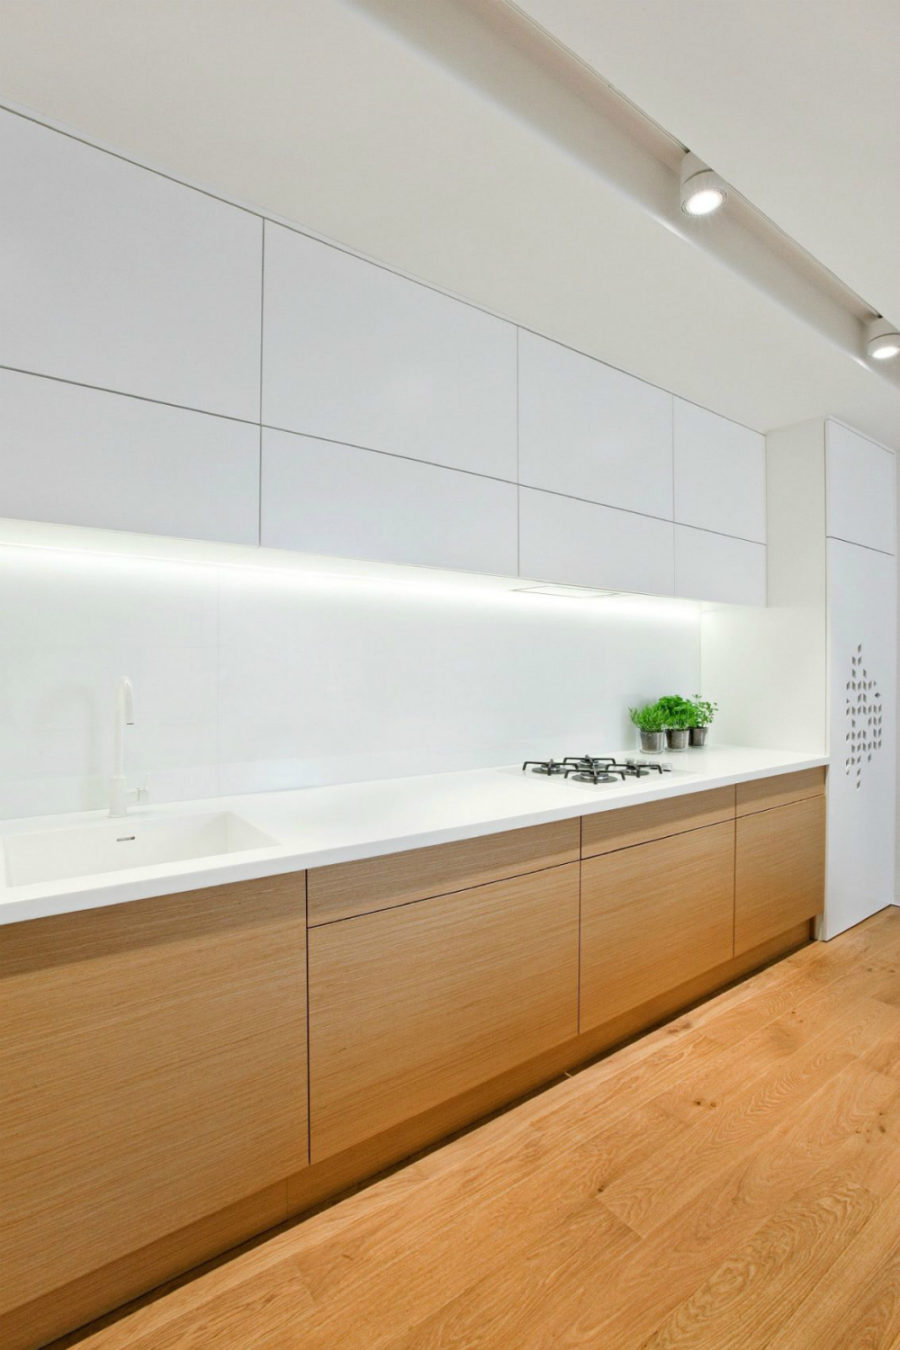 Built-in white light illuminates the worktop